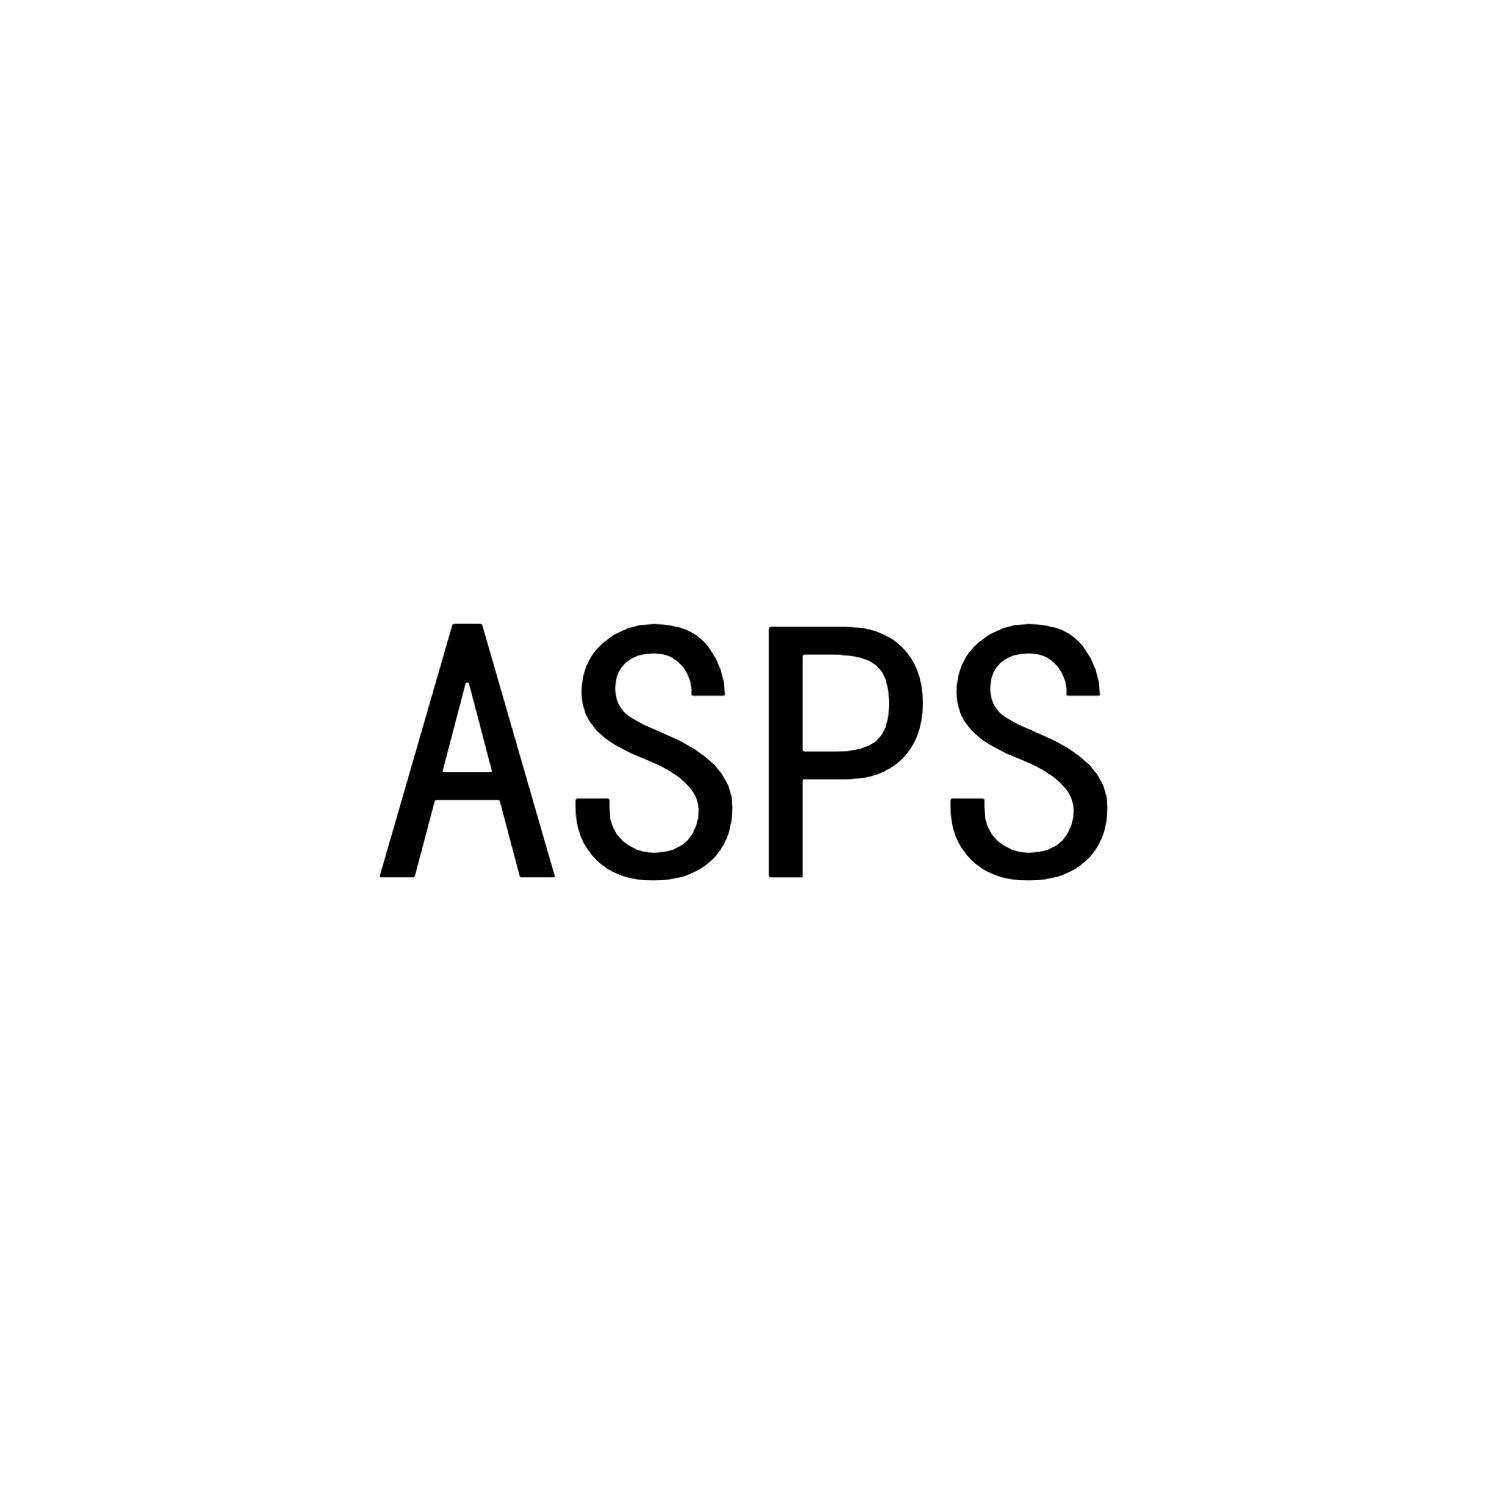 ASPS